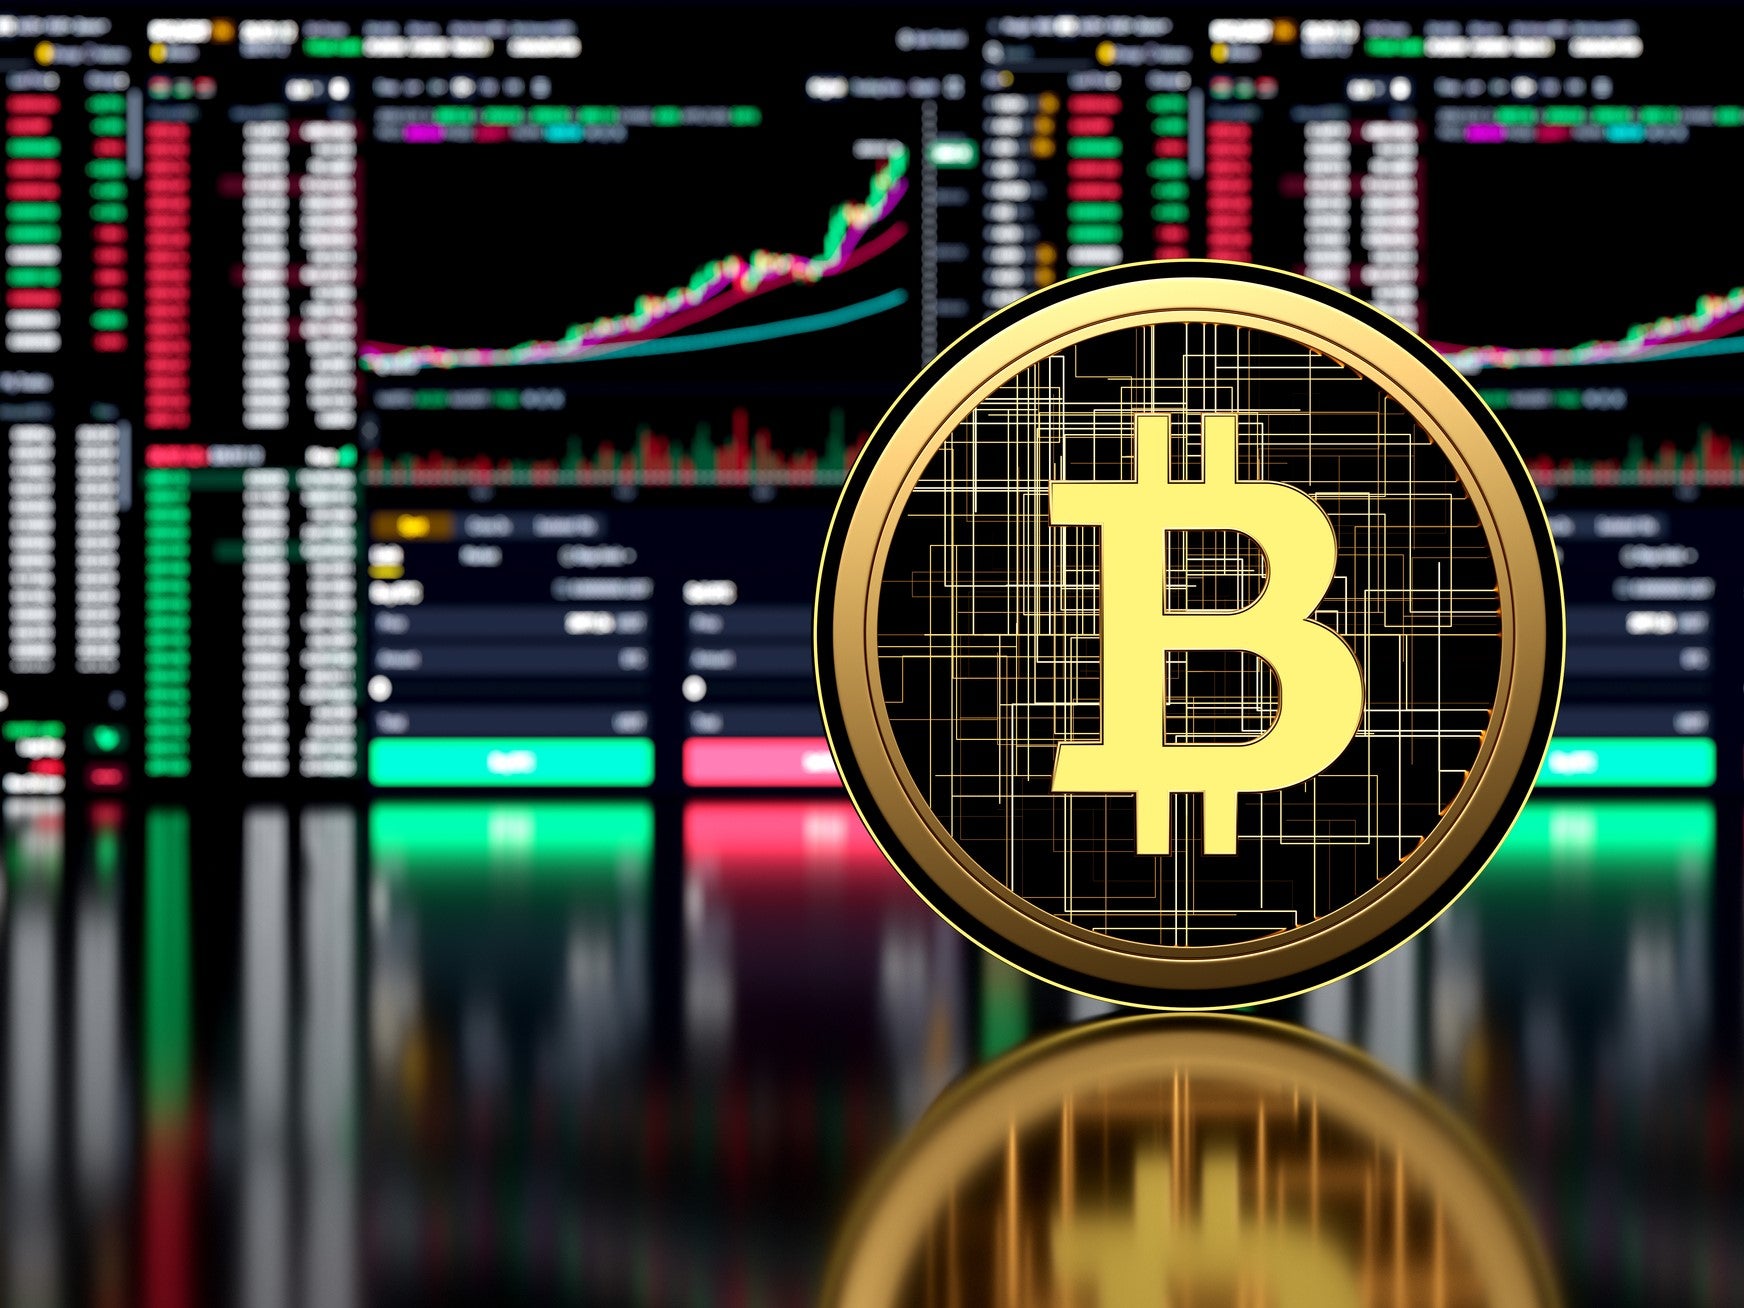 Bitcoin trading, investing and gambling platforms have proved controversial among regulators